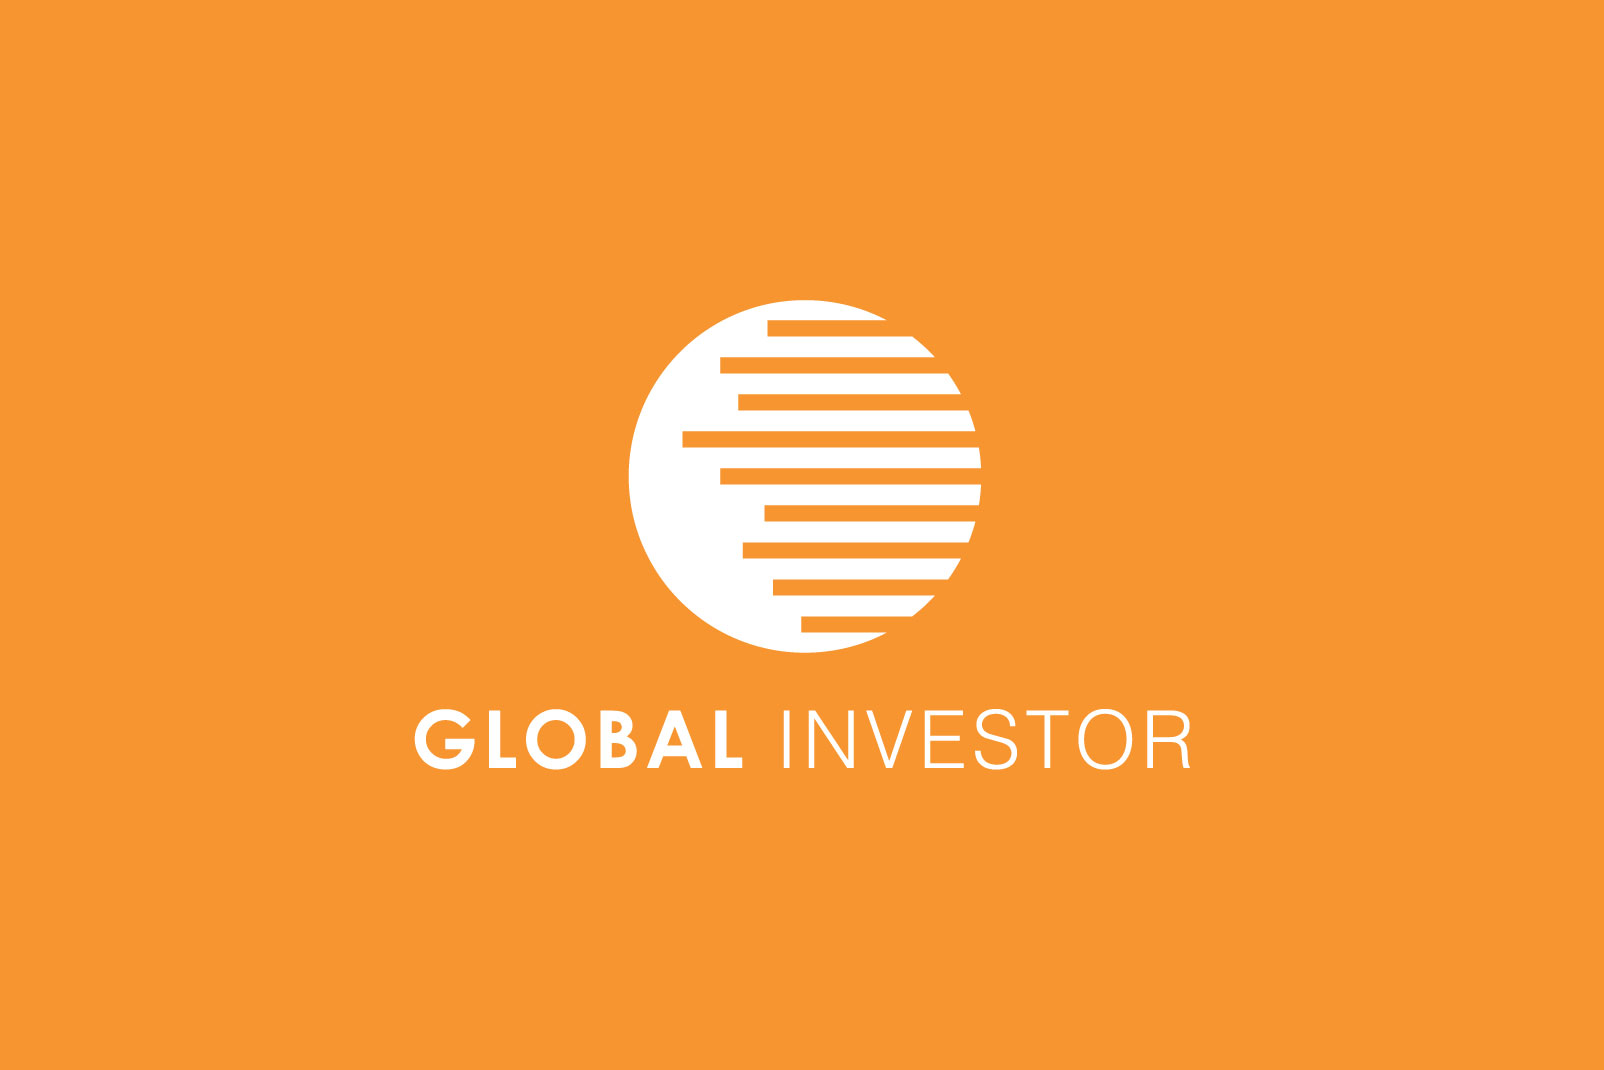 Thiết kế logo công ty Global Investor